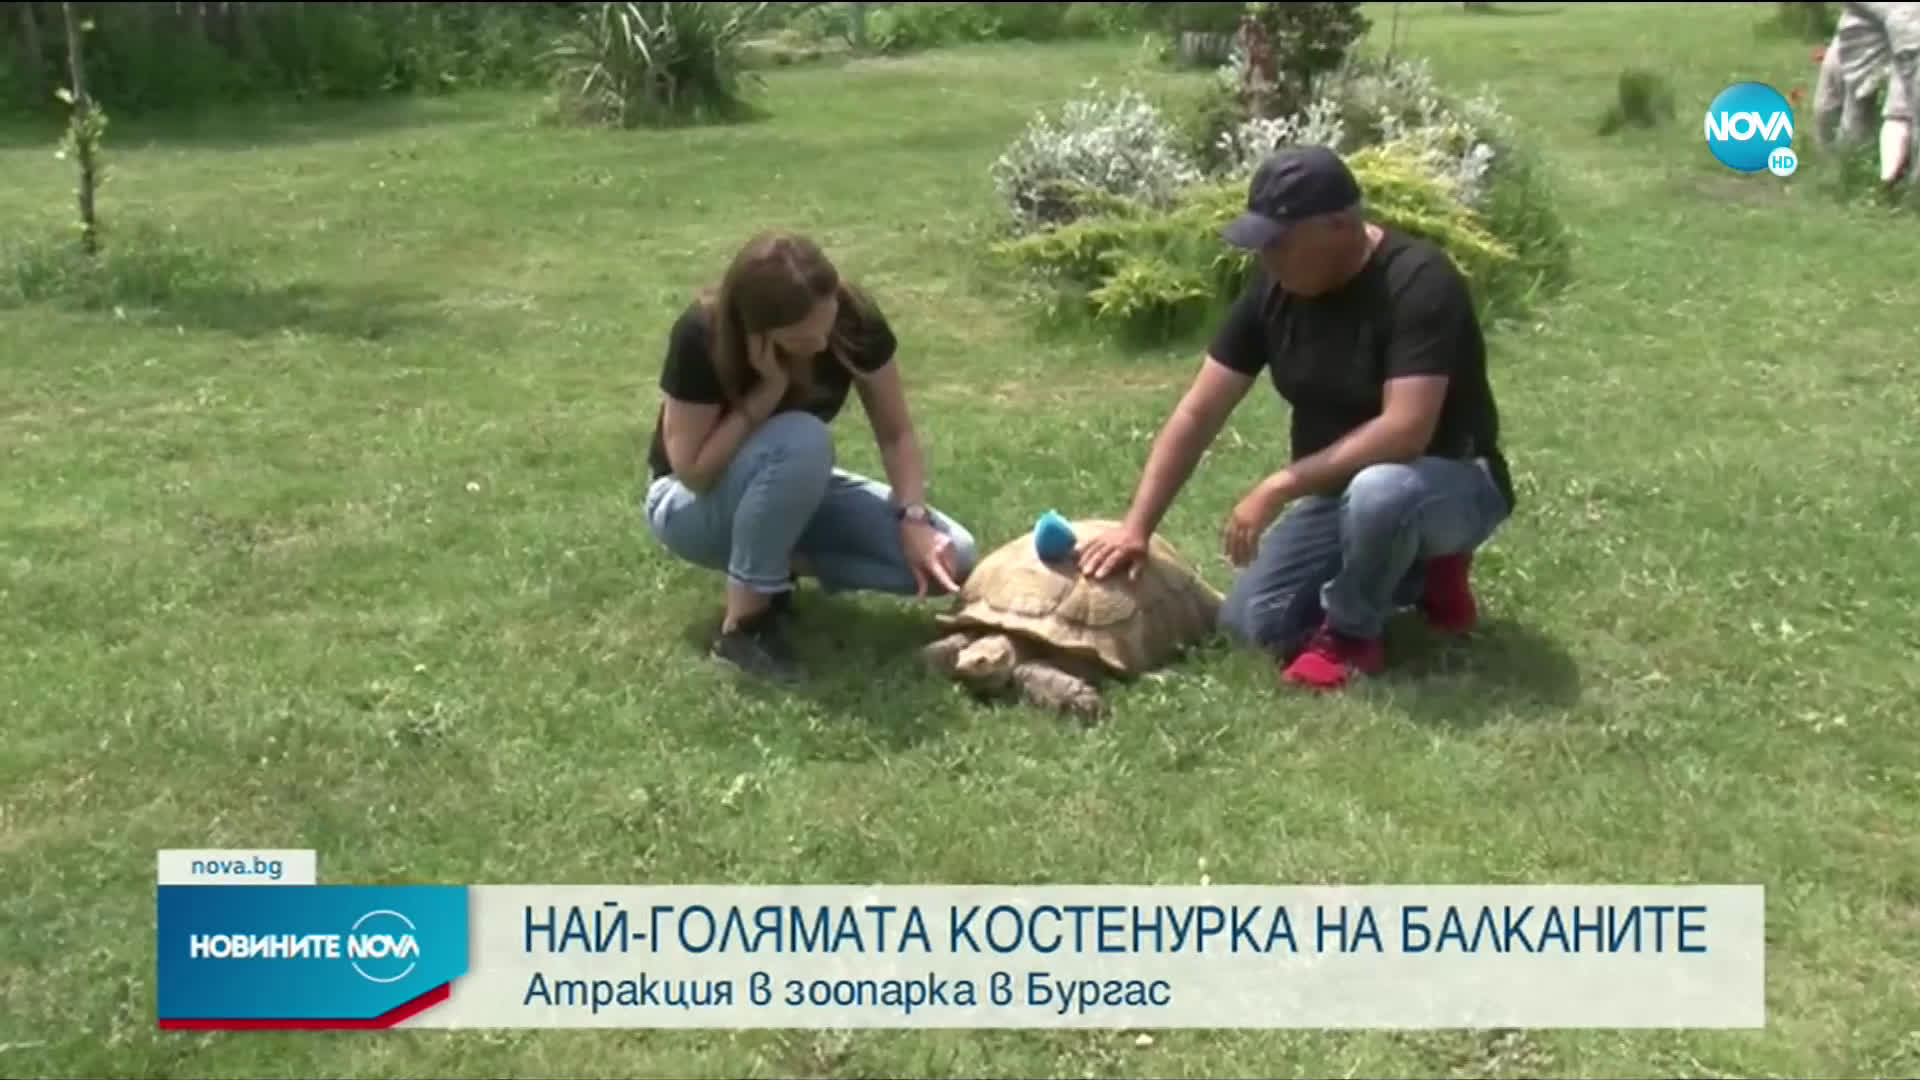 Гигантска костенурка ще обитава зоопарка в Бургас